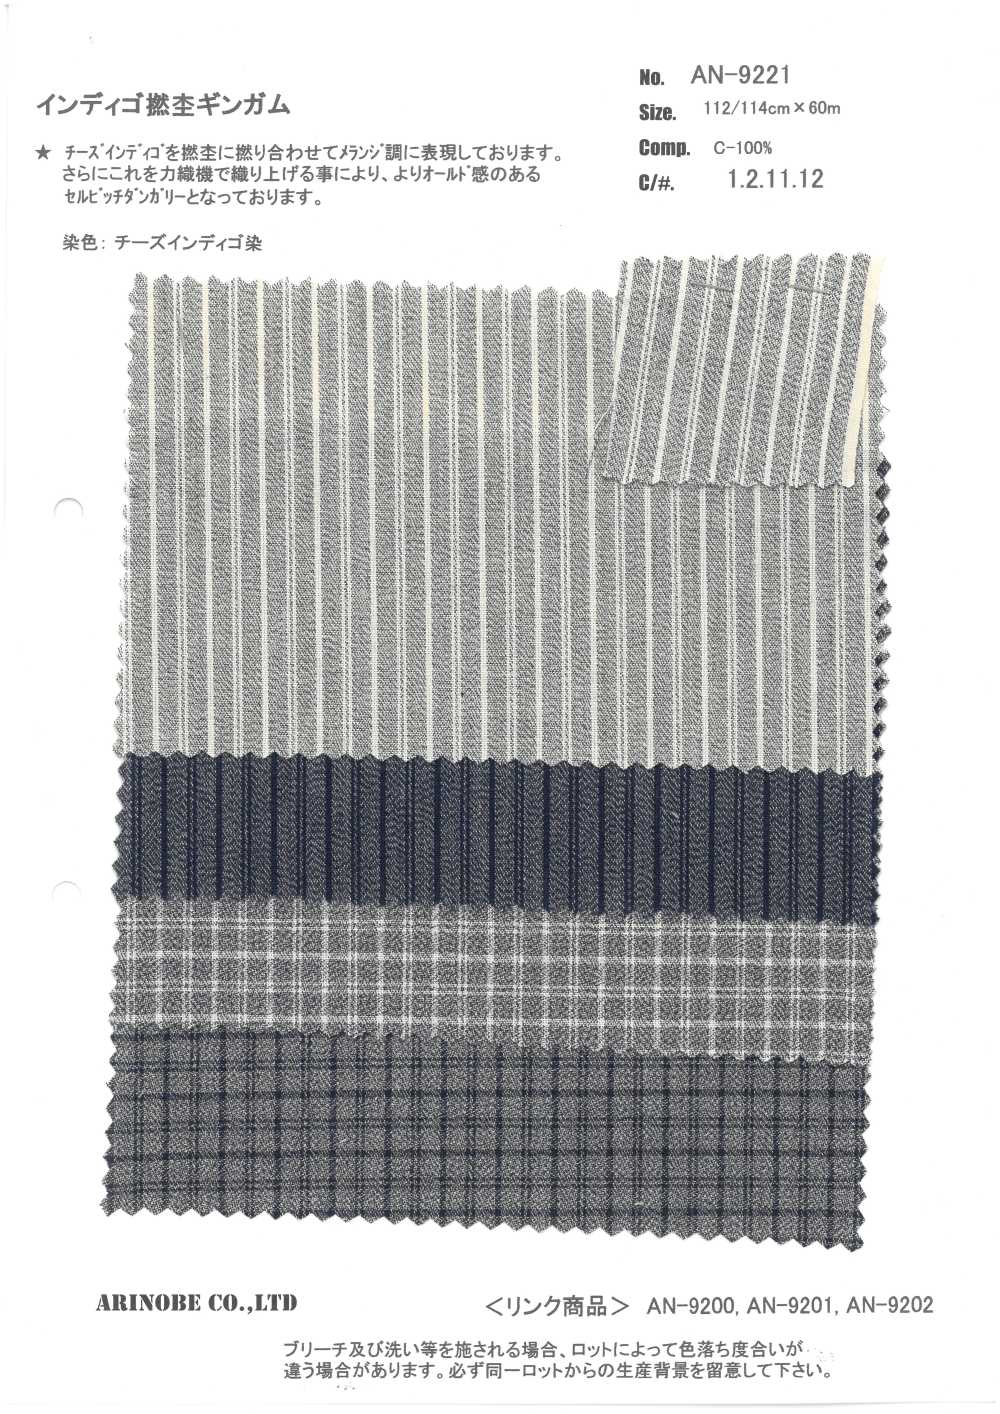 AN-9221 Indigo Twisted Heather Gingham[Fabrica Textil] ARINOBE CO., LTD.